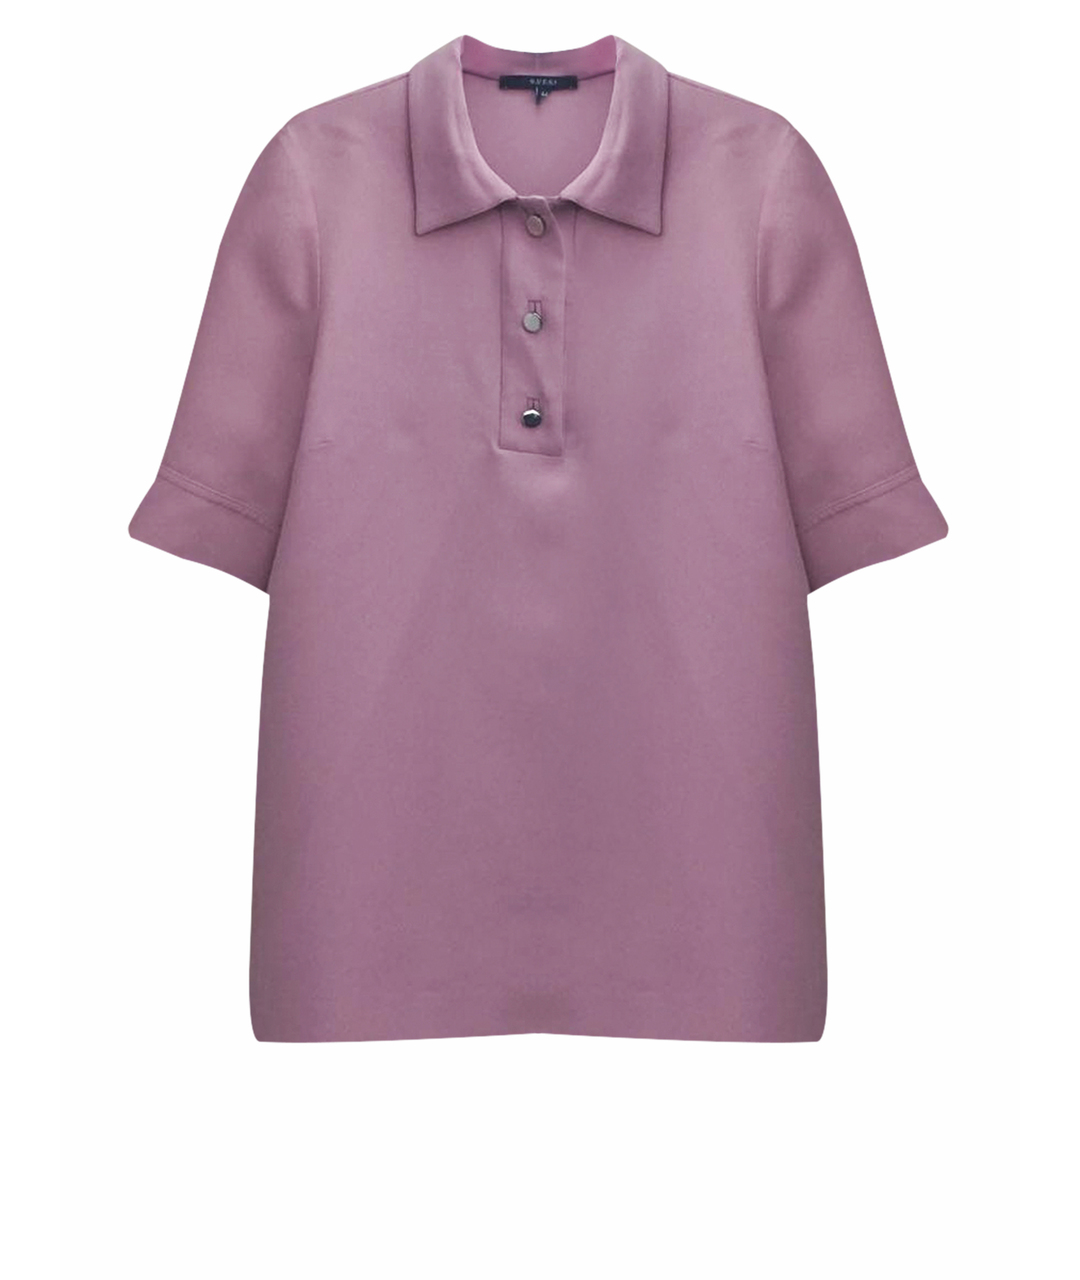 GUCCI Розовая шелковая рубашка, фото 1